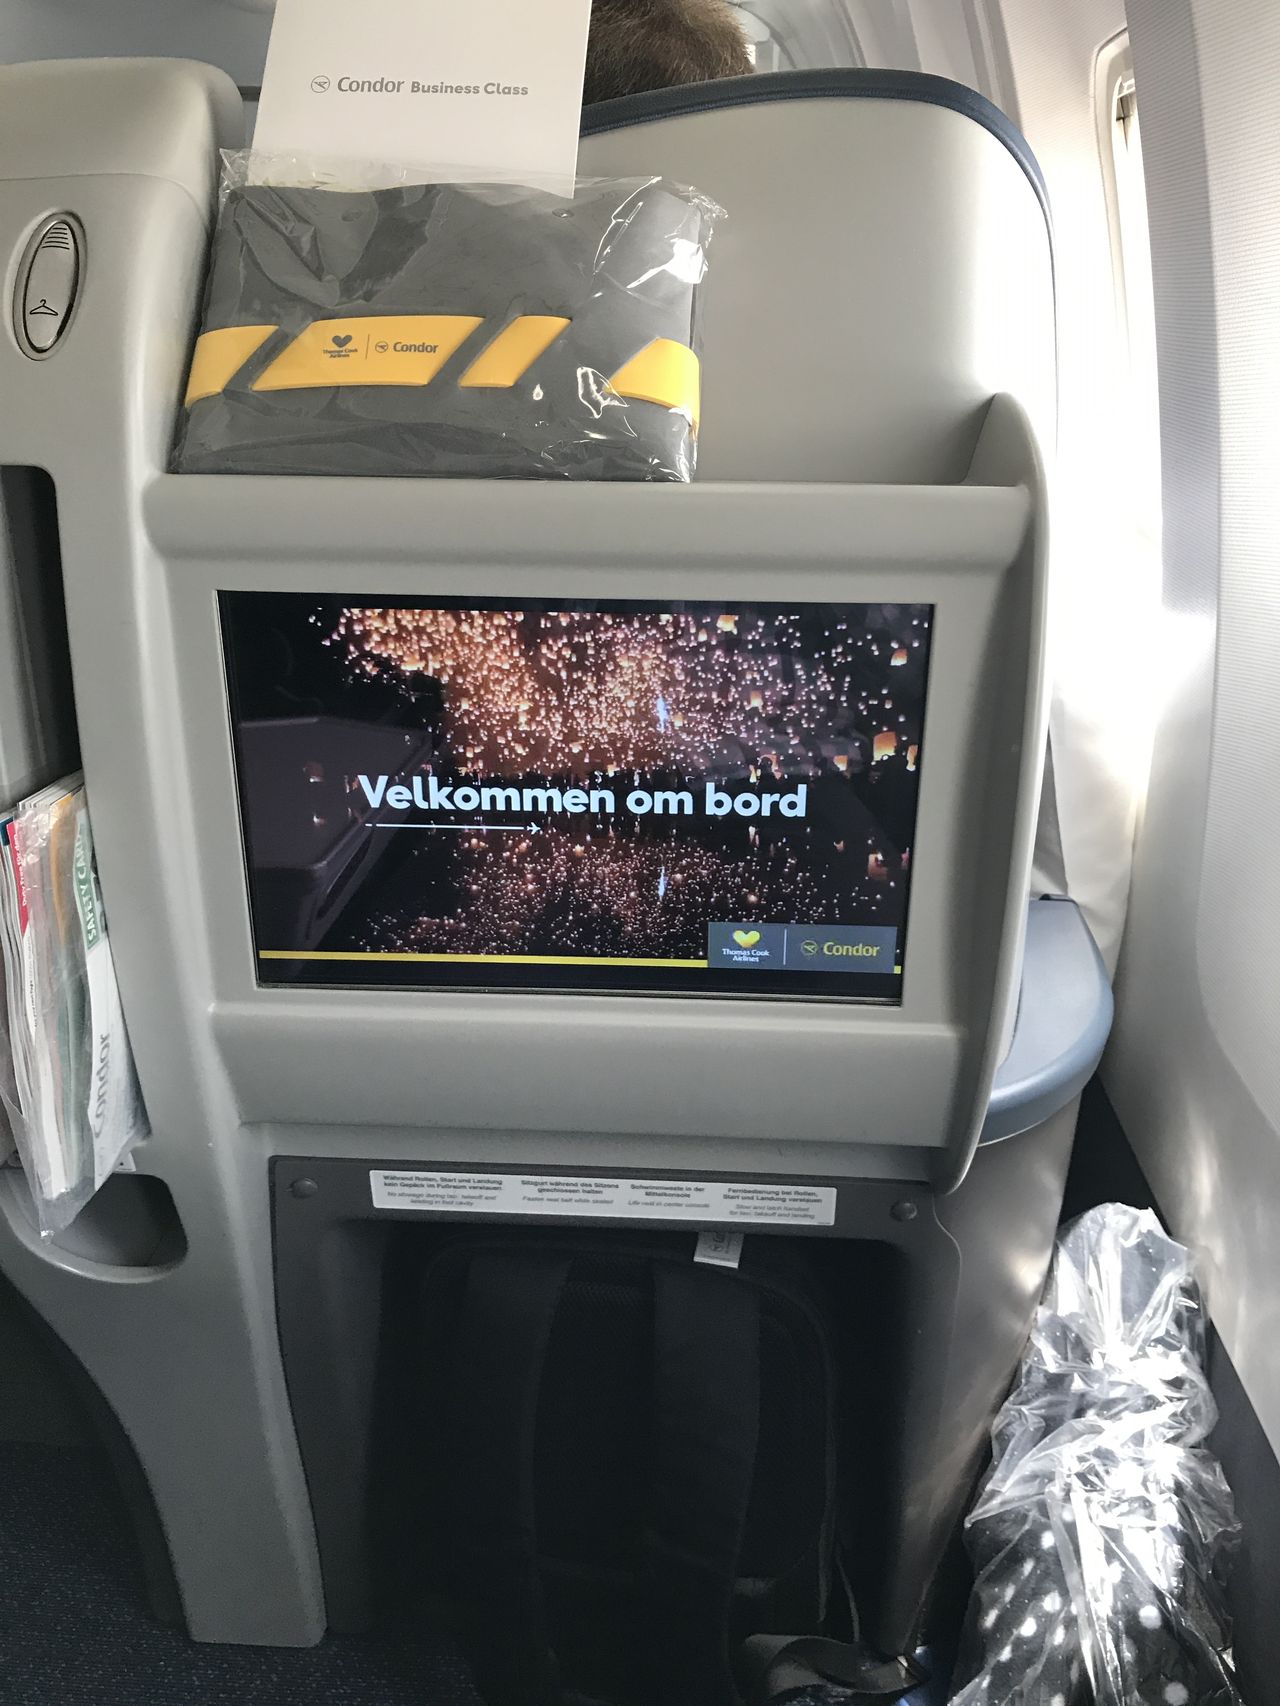 Lufthansa sets sights on Thomas Cook's Condor – DW – 05/07/2019